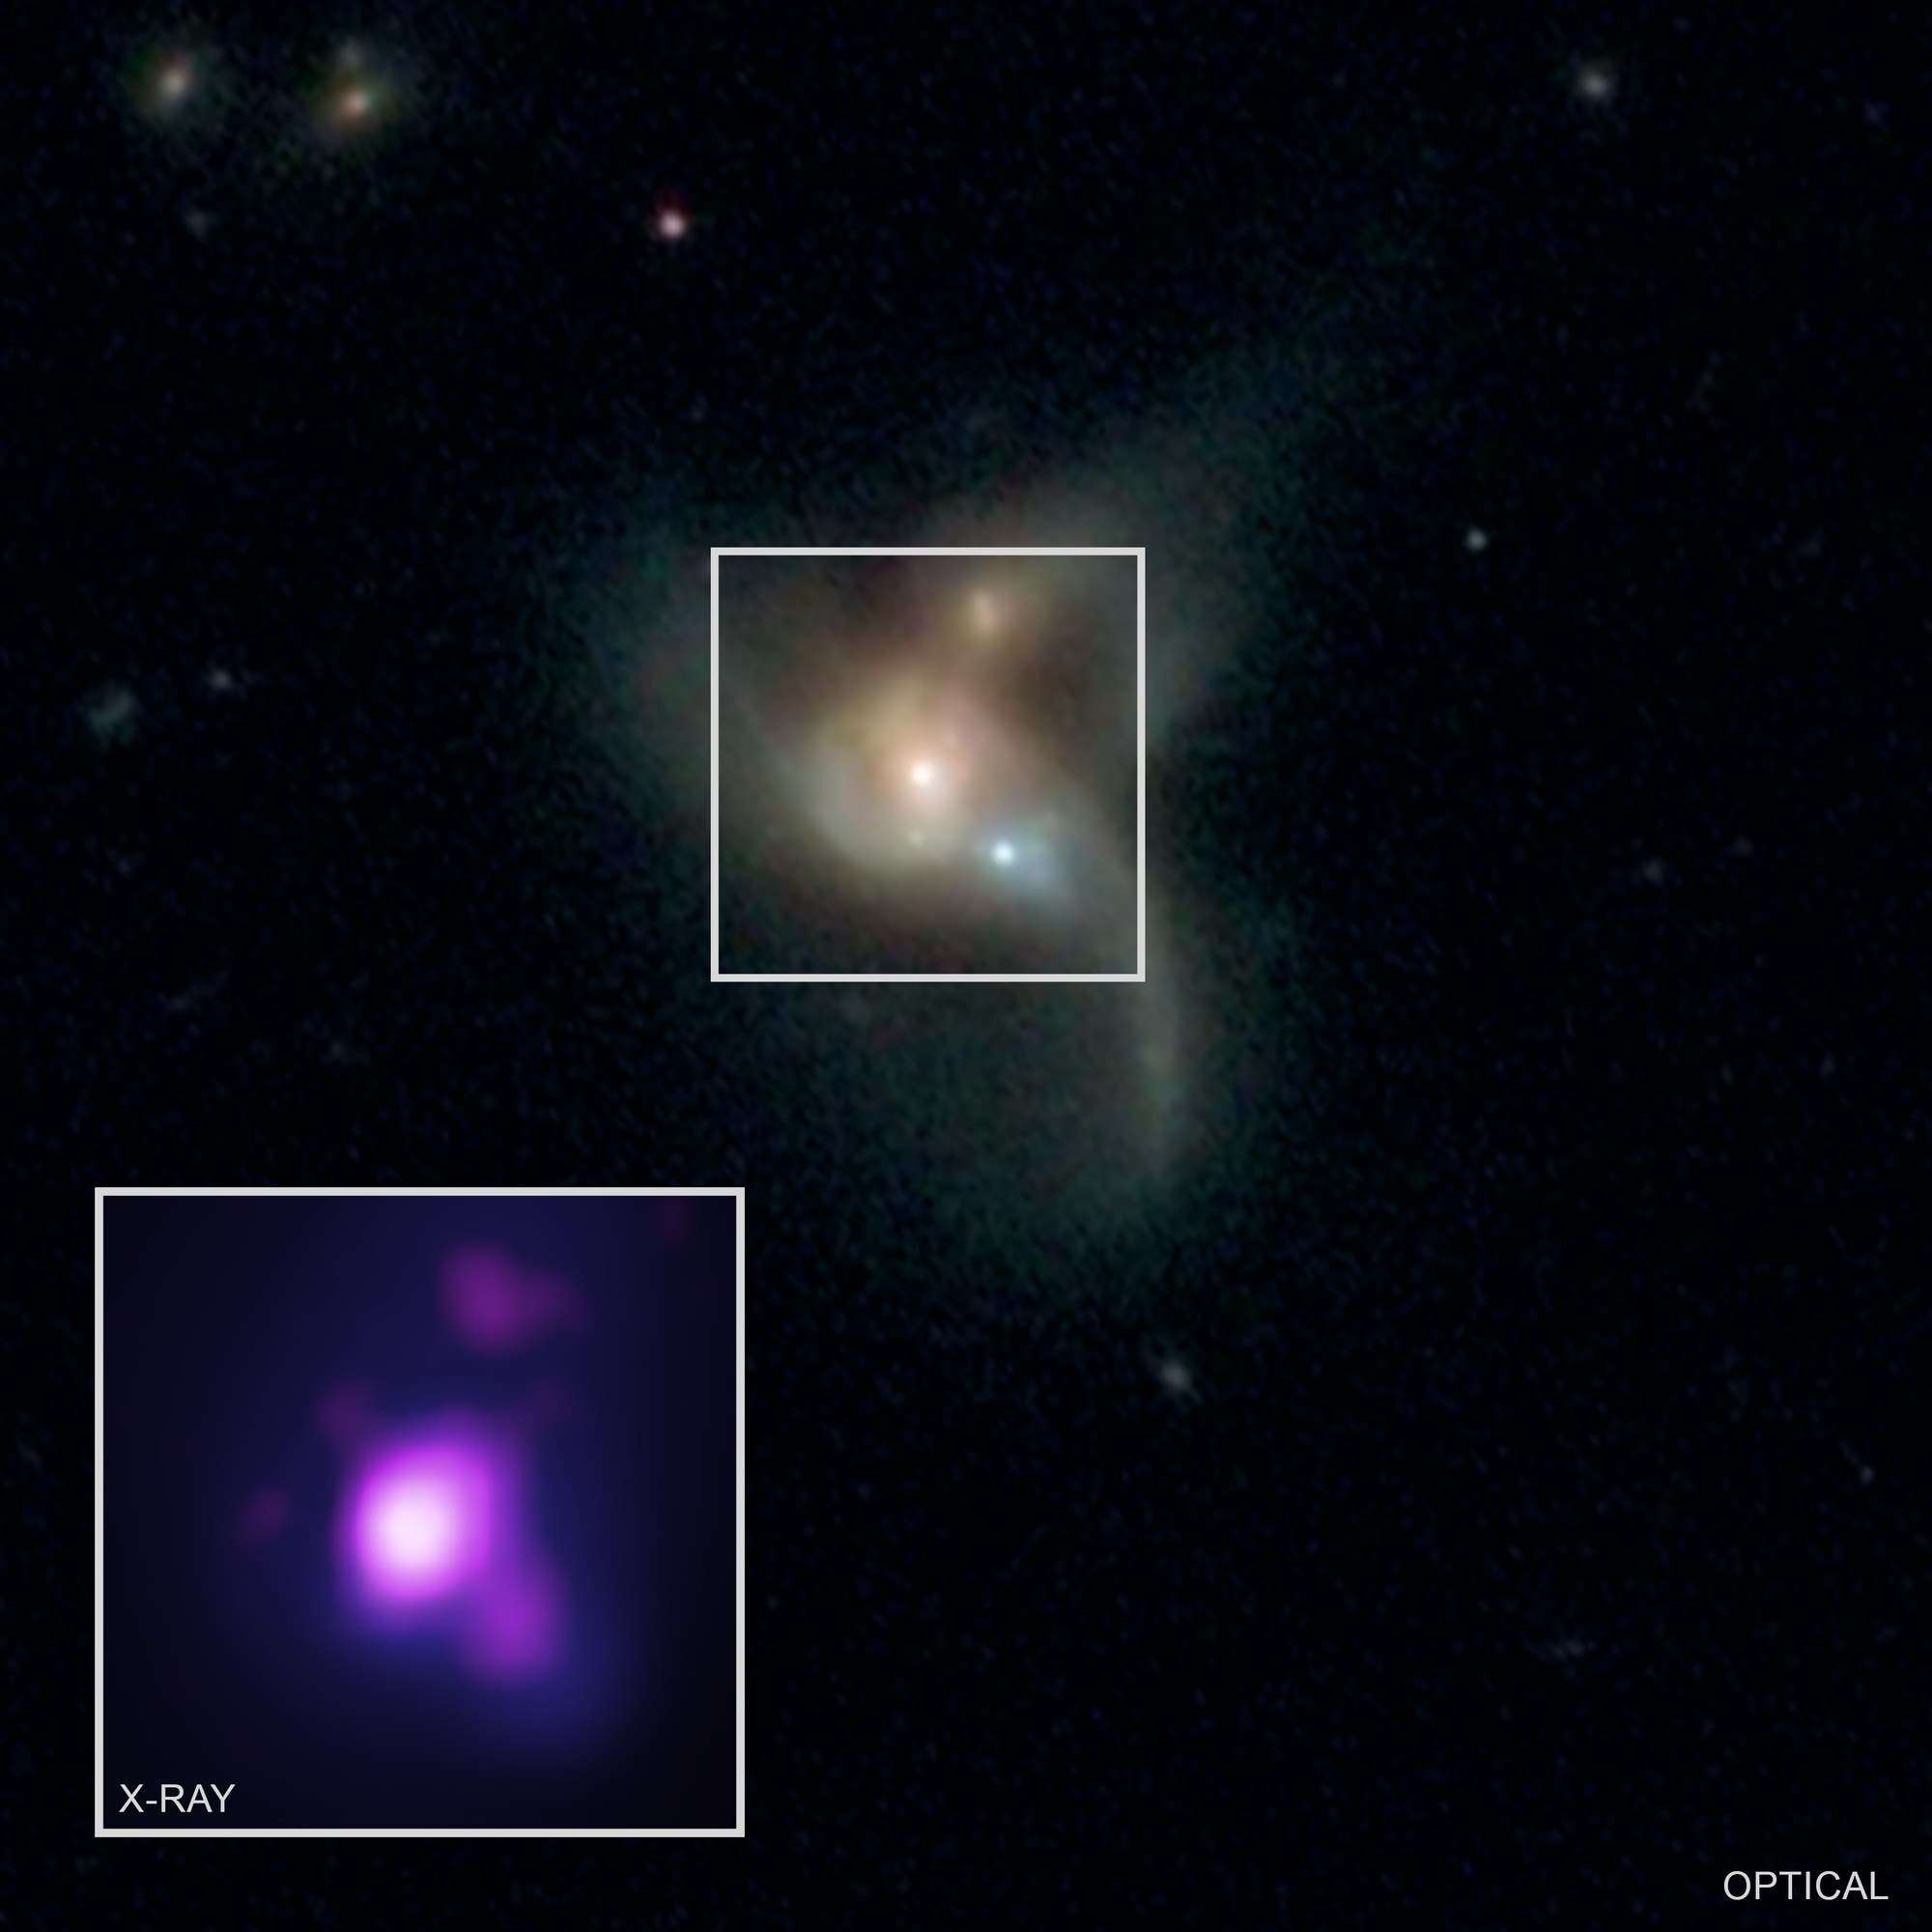 SDSS J0849+1114